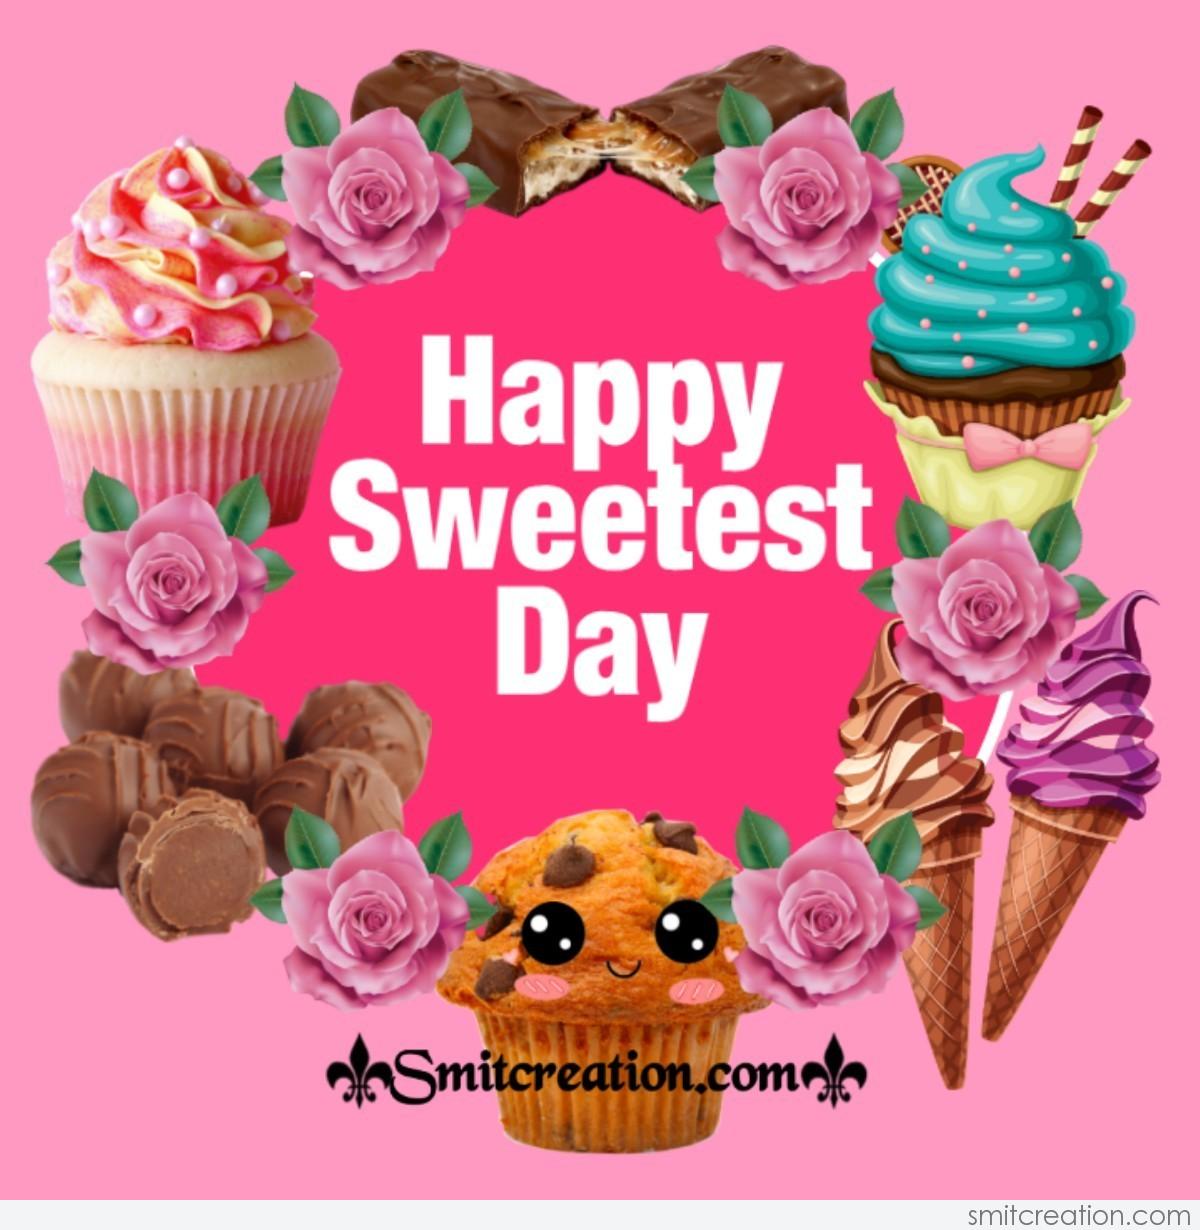 happy-sweetest-day-cupcakes-card-smitcreation